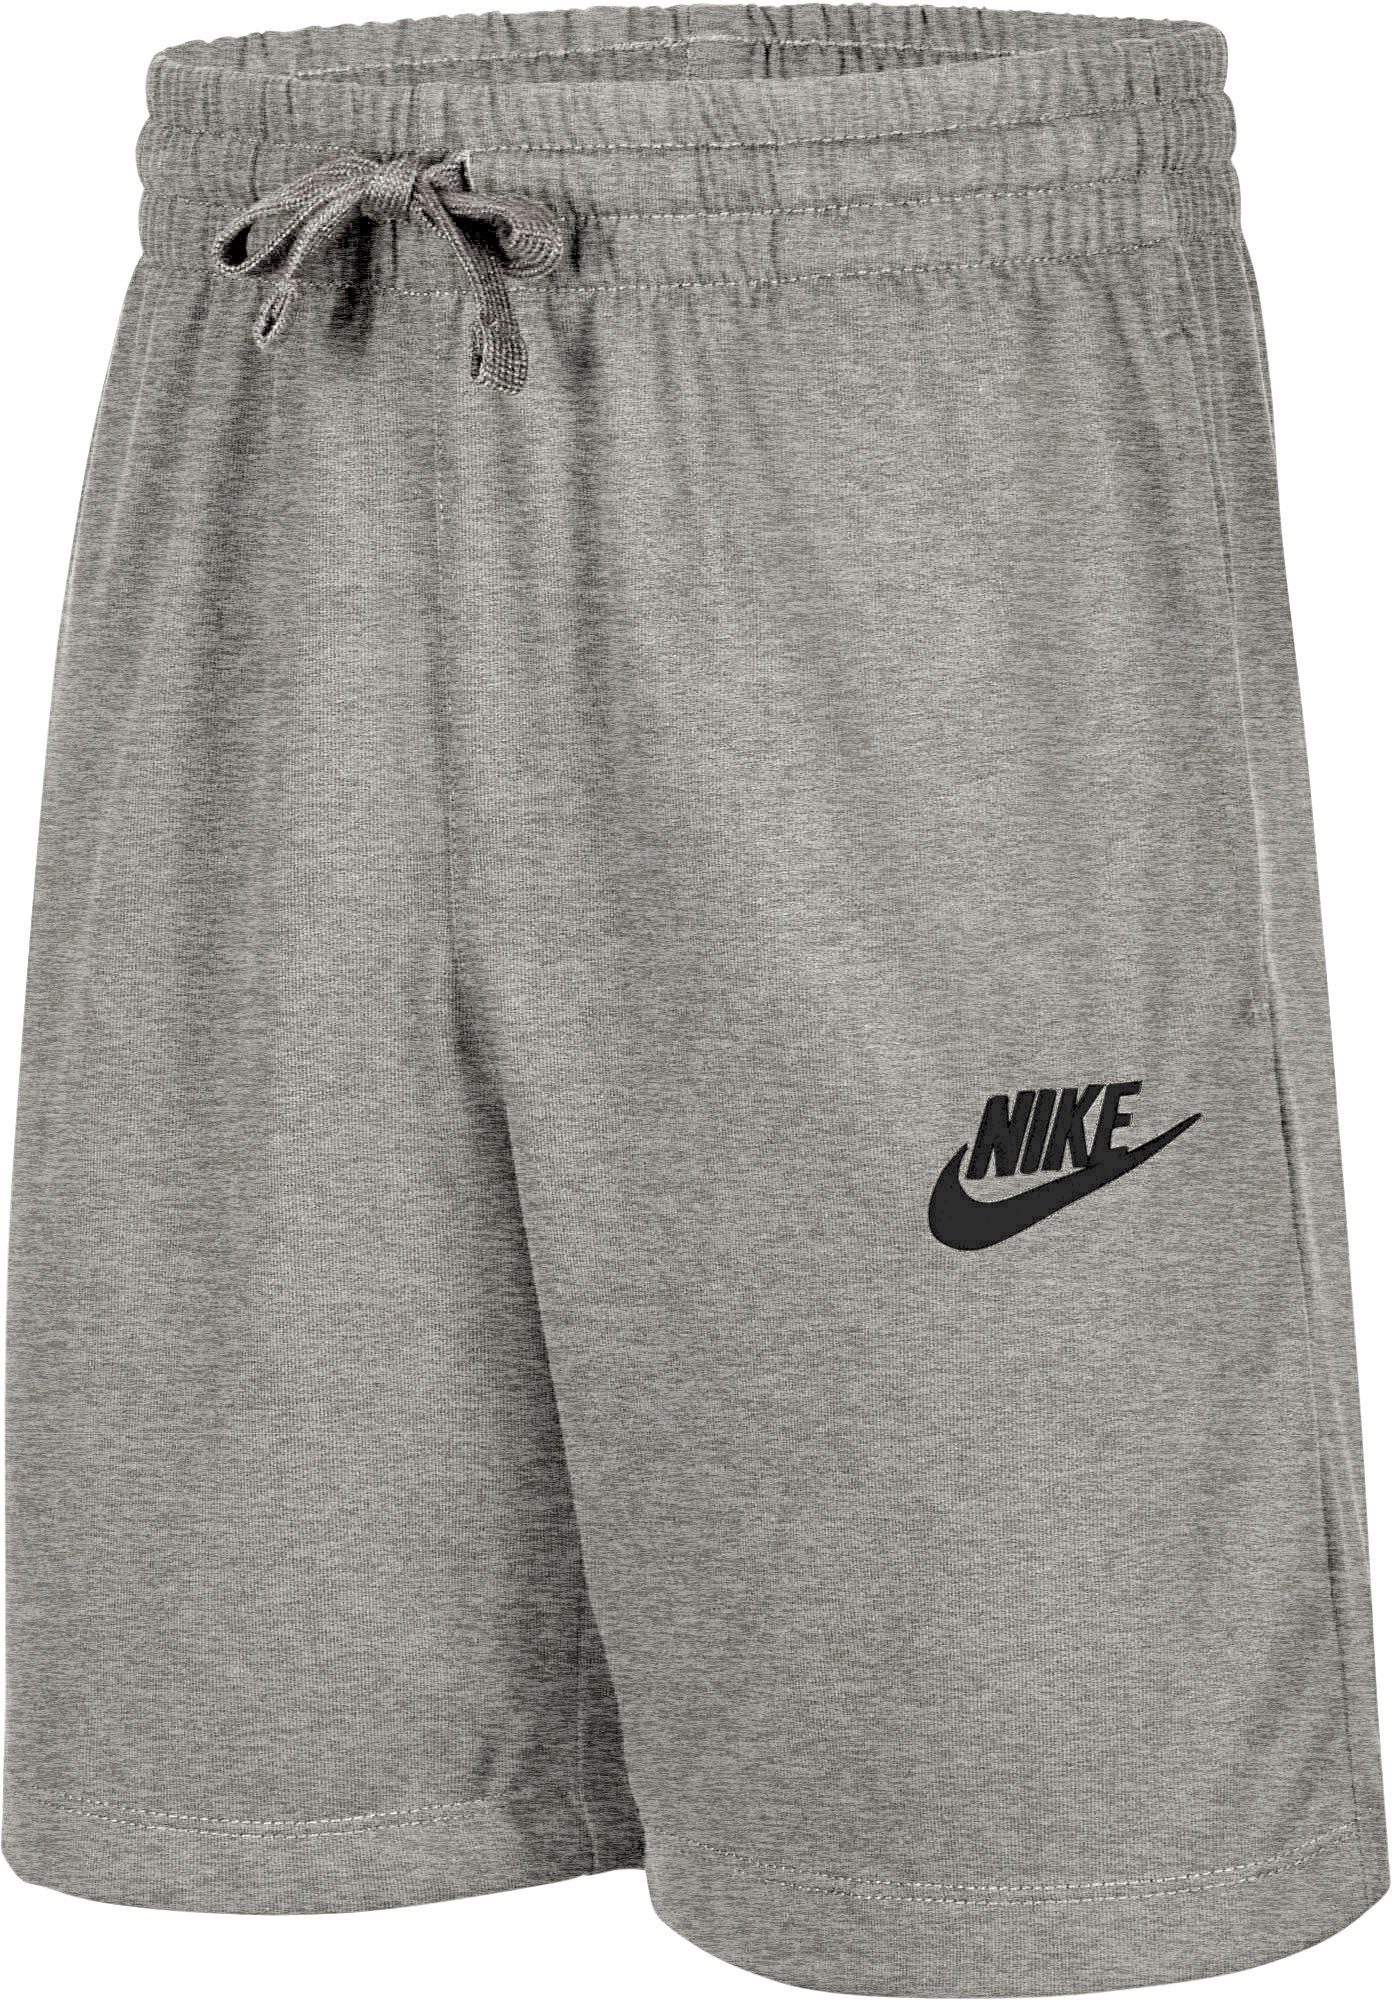 KIDS' JERSEY (BOYS) BIG Shorts SHORTS Nike Sportswear grau